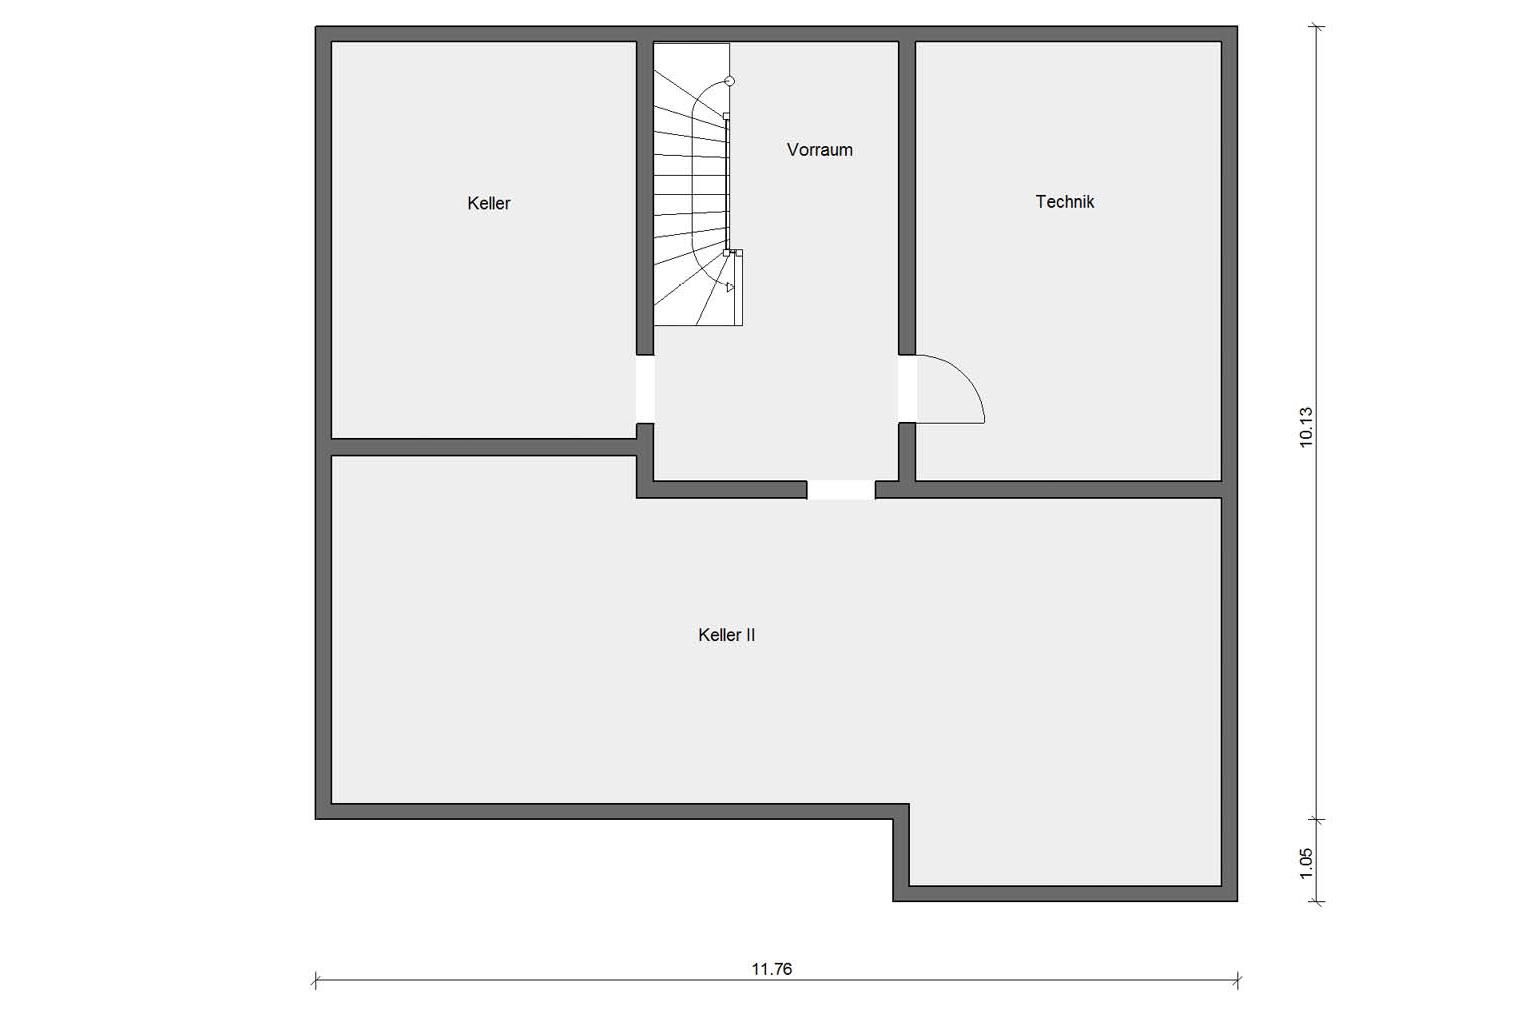 Floor plan basement E 15-197.2 Prefabricated house with clinker facade